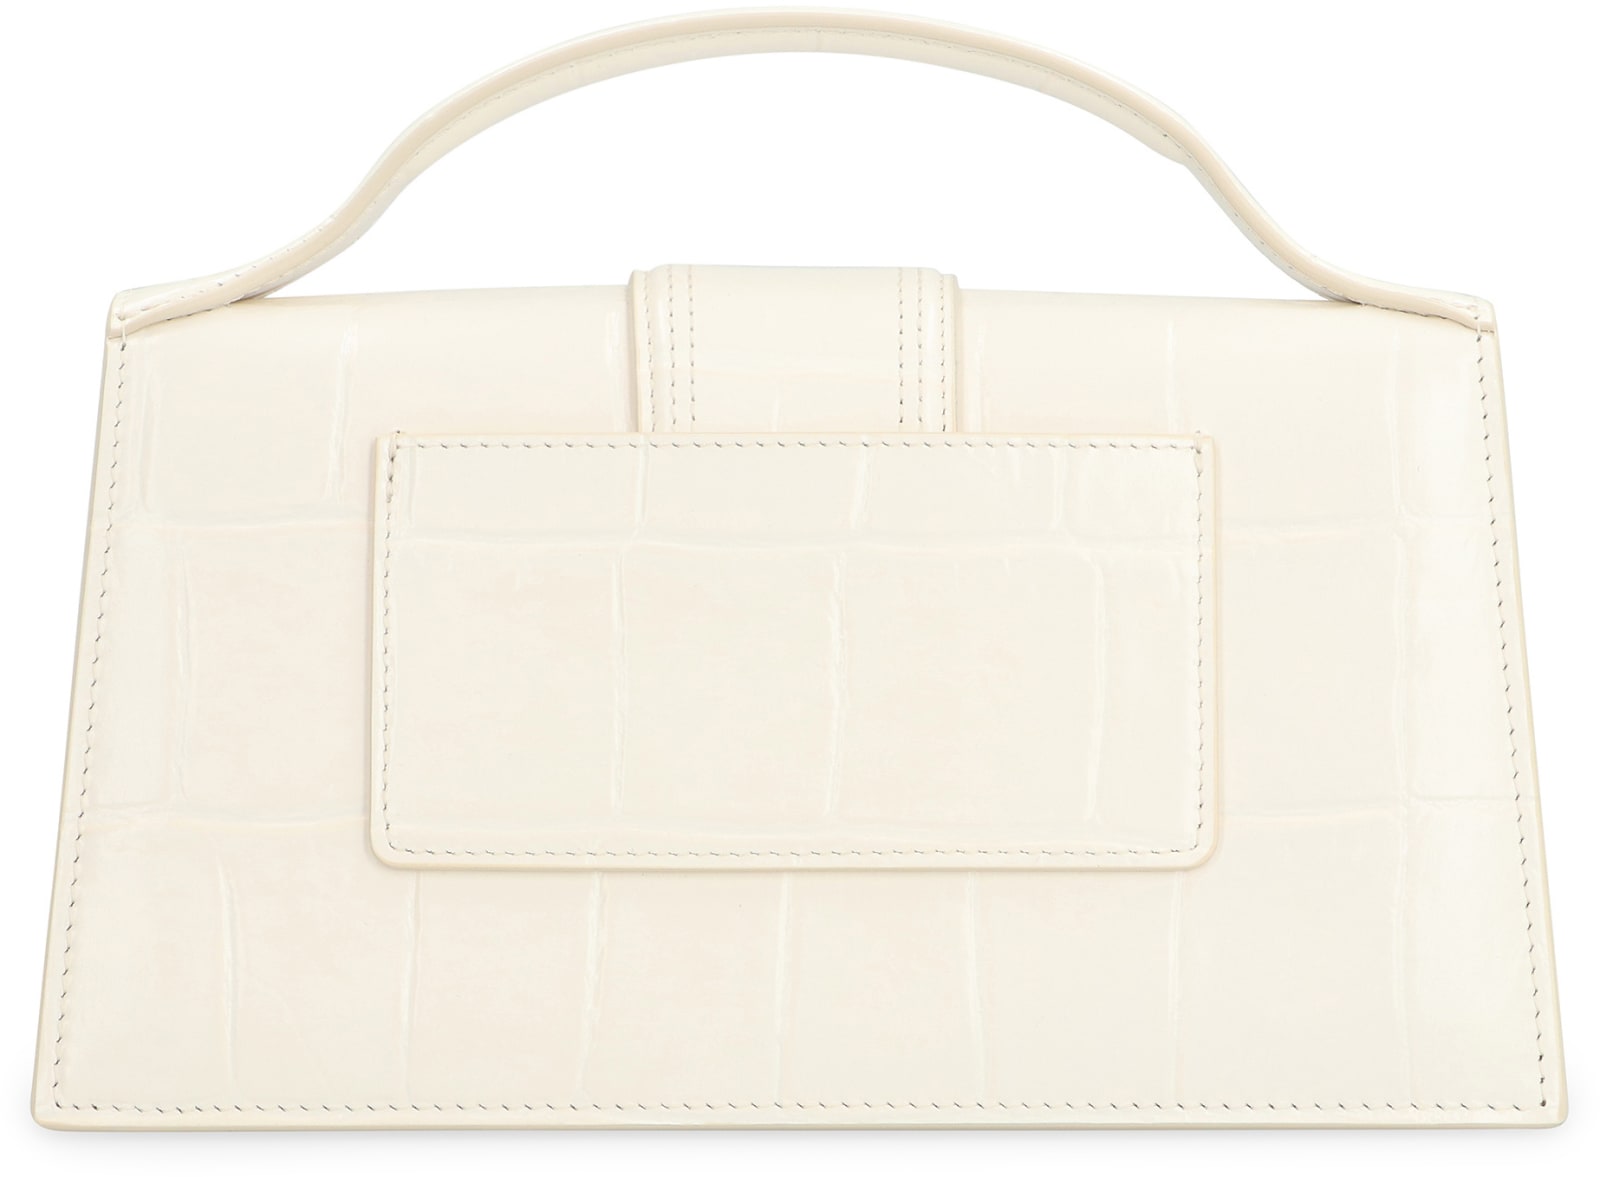 Shop Jacquemus Le Grand Bambino Leather Handbag In White